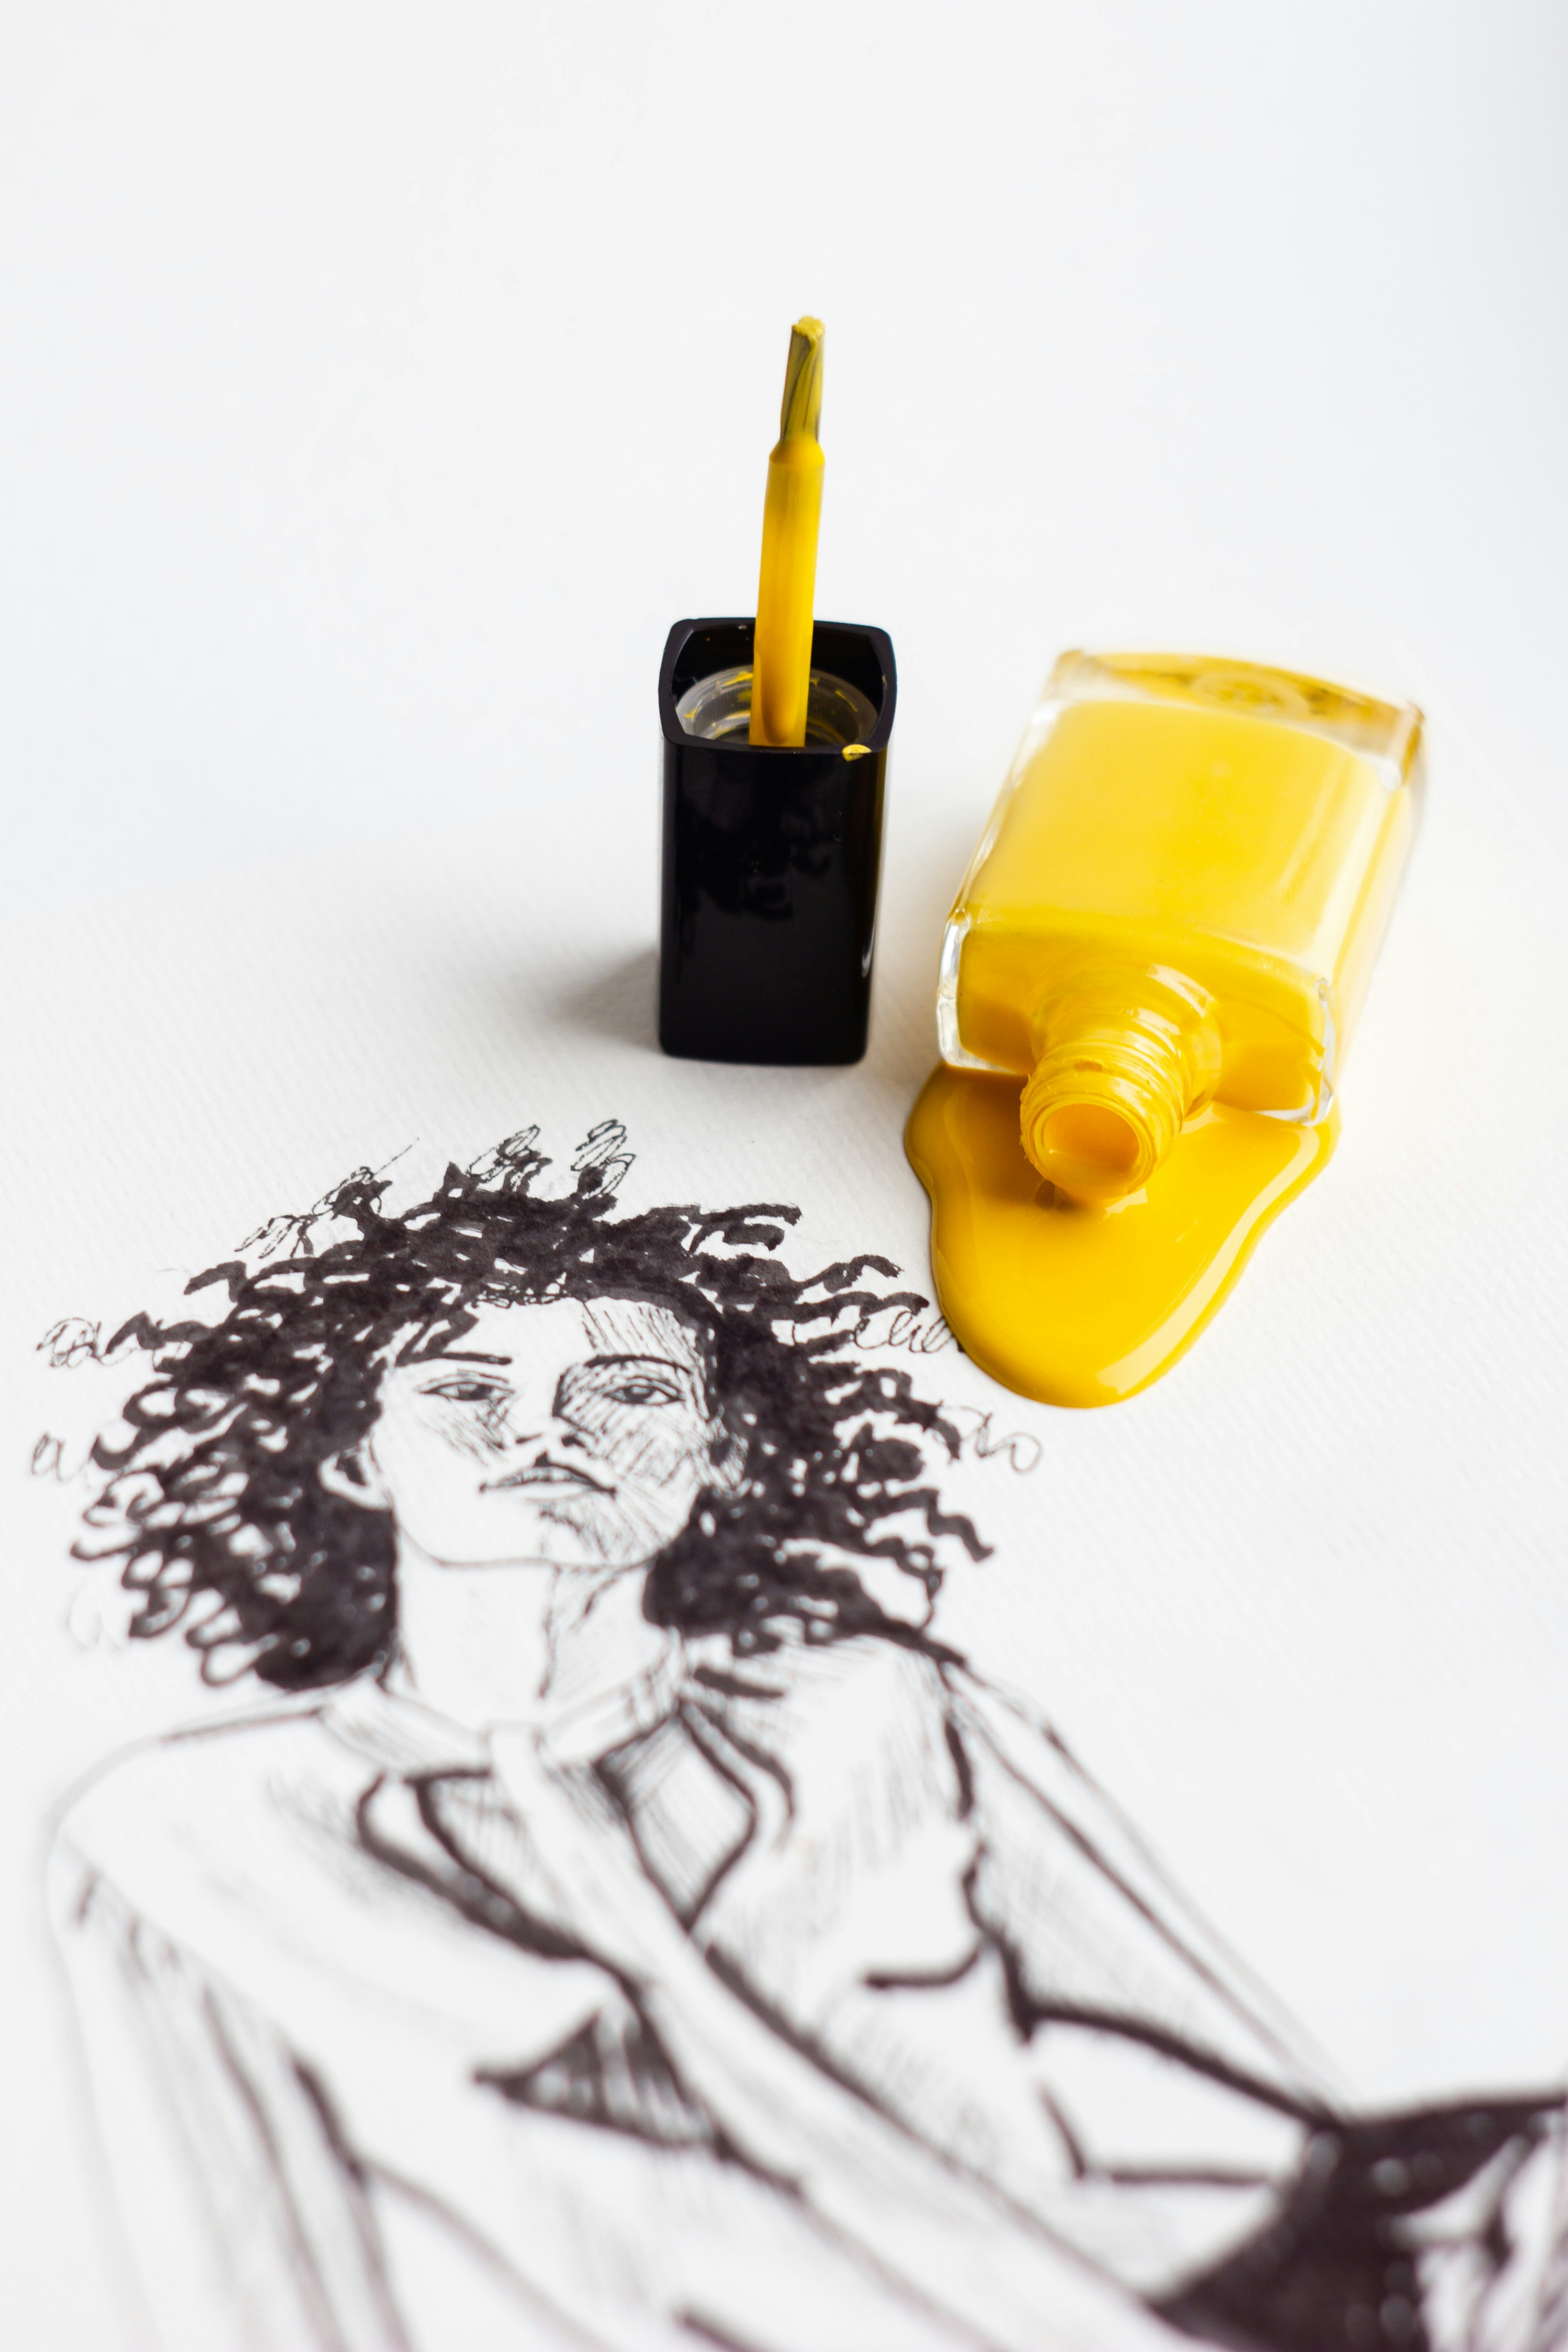 yellow and black plastic tool